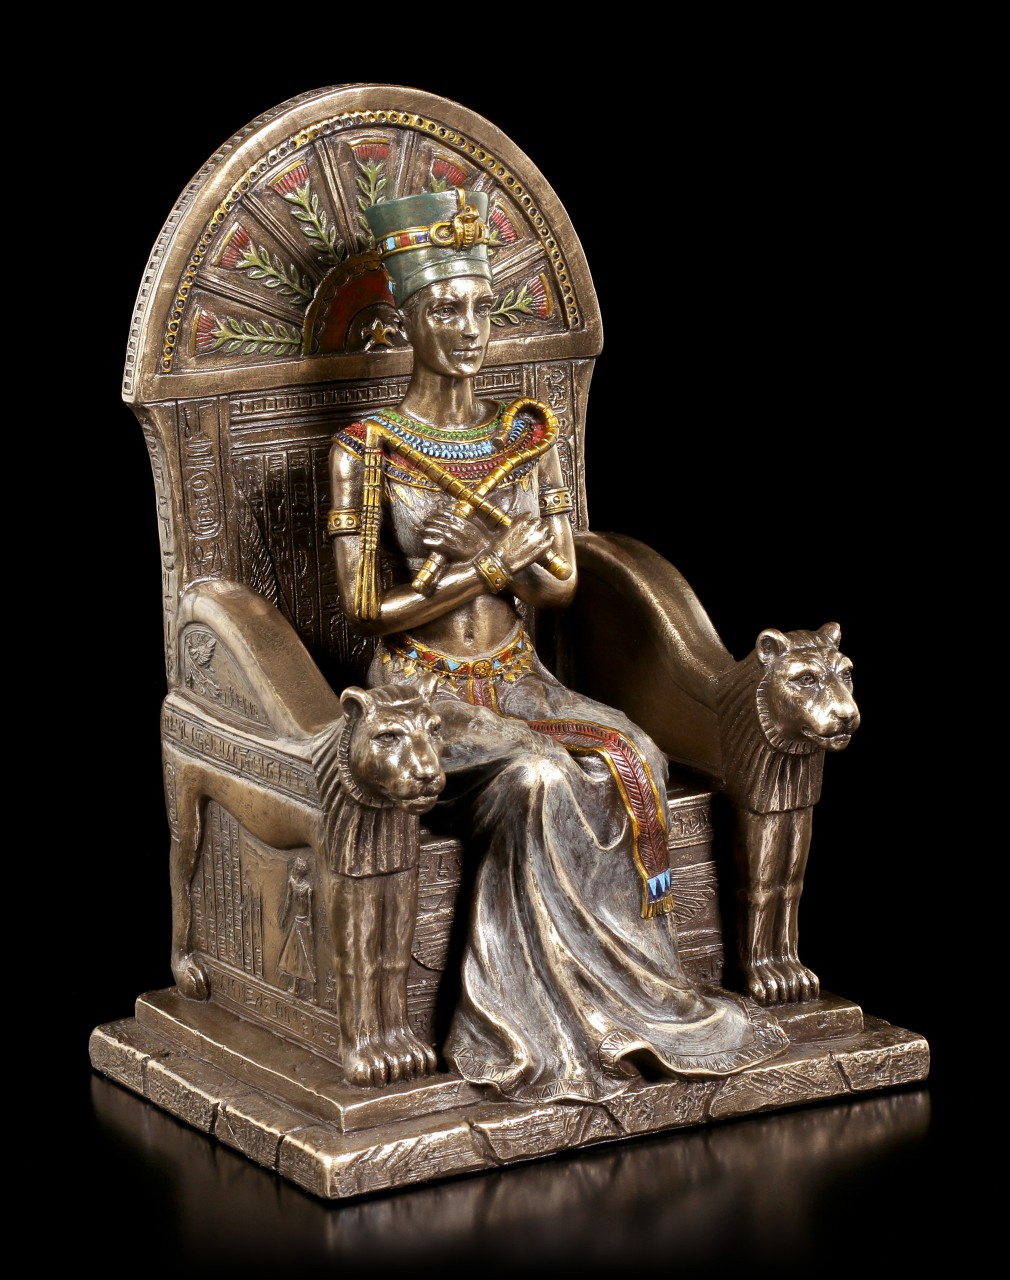 Nefertiti Figurine sitting on Throne